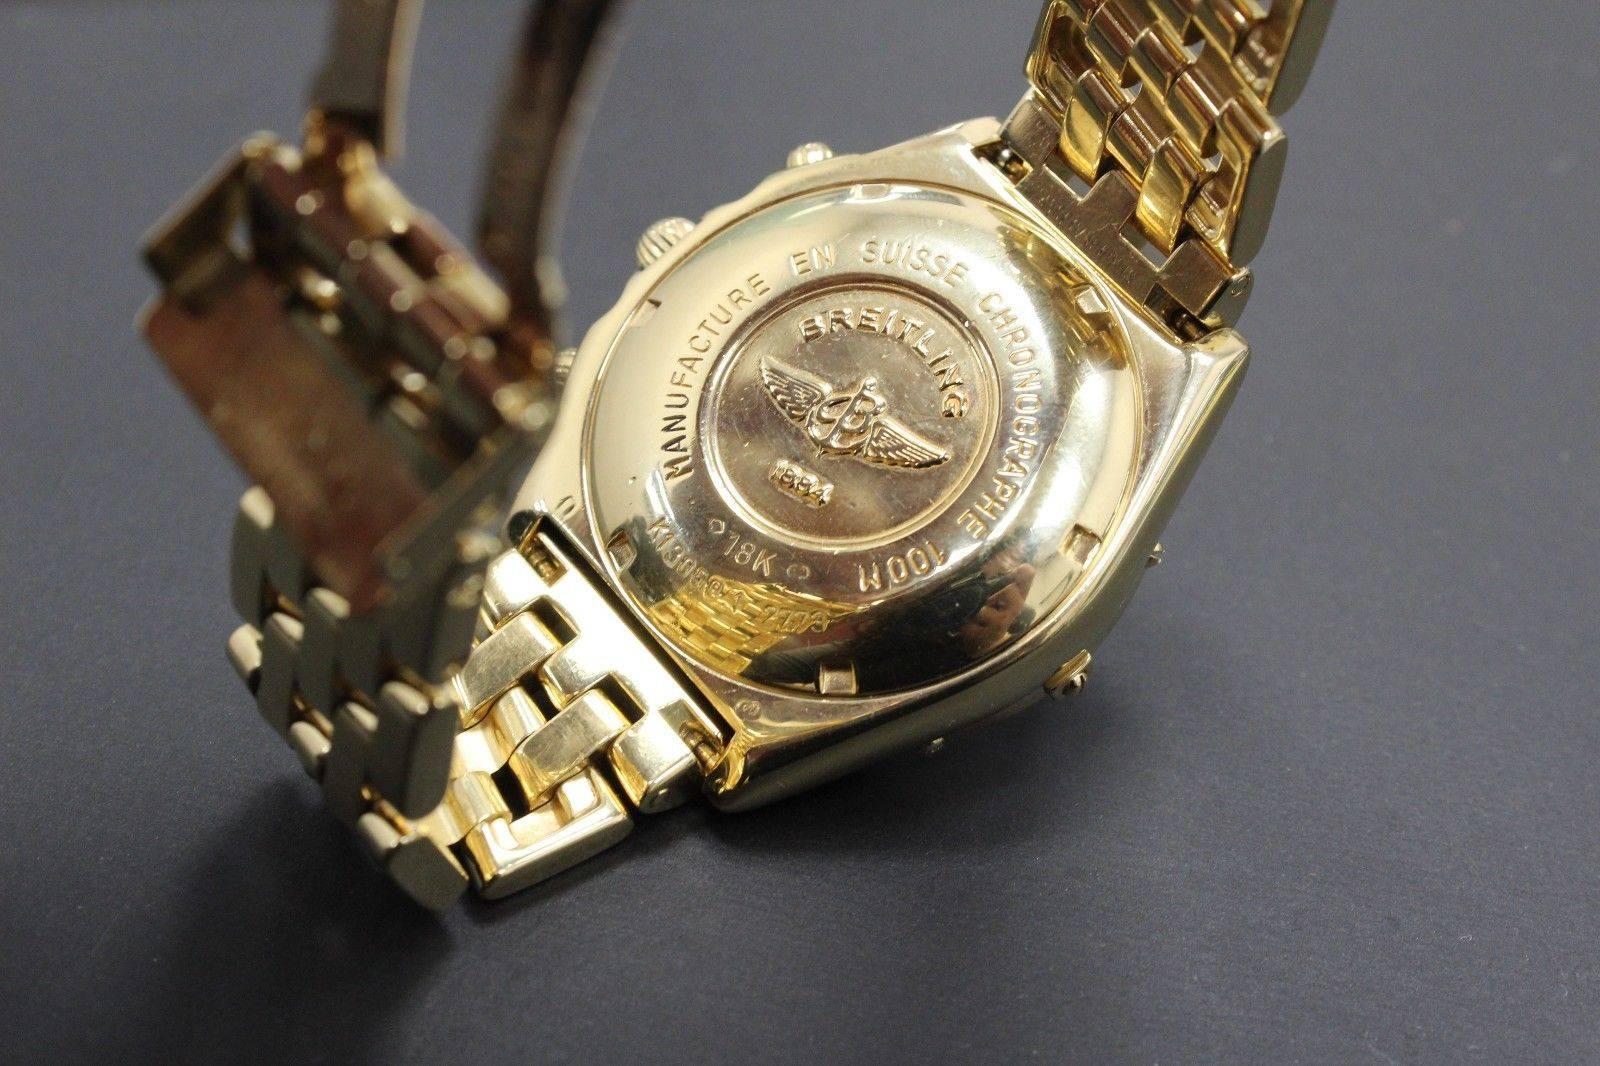 Breitling Chronomat Chronograph K13050.1 Solid 18 Karat Yellow Gold Dial 2